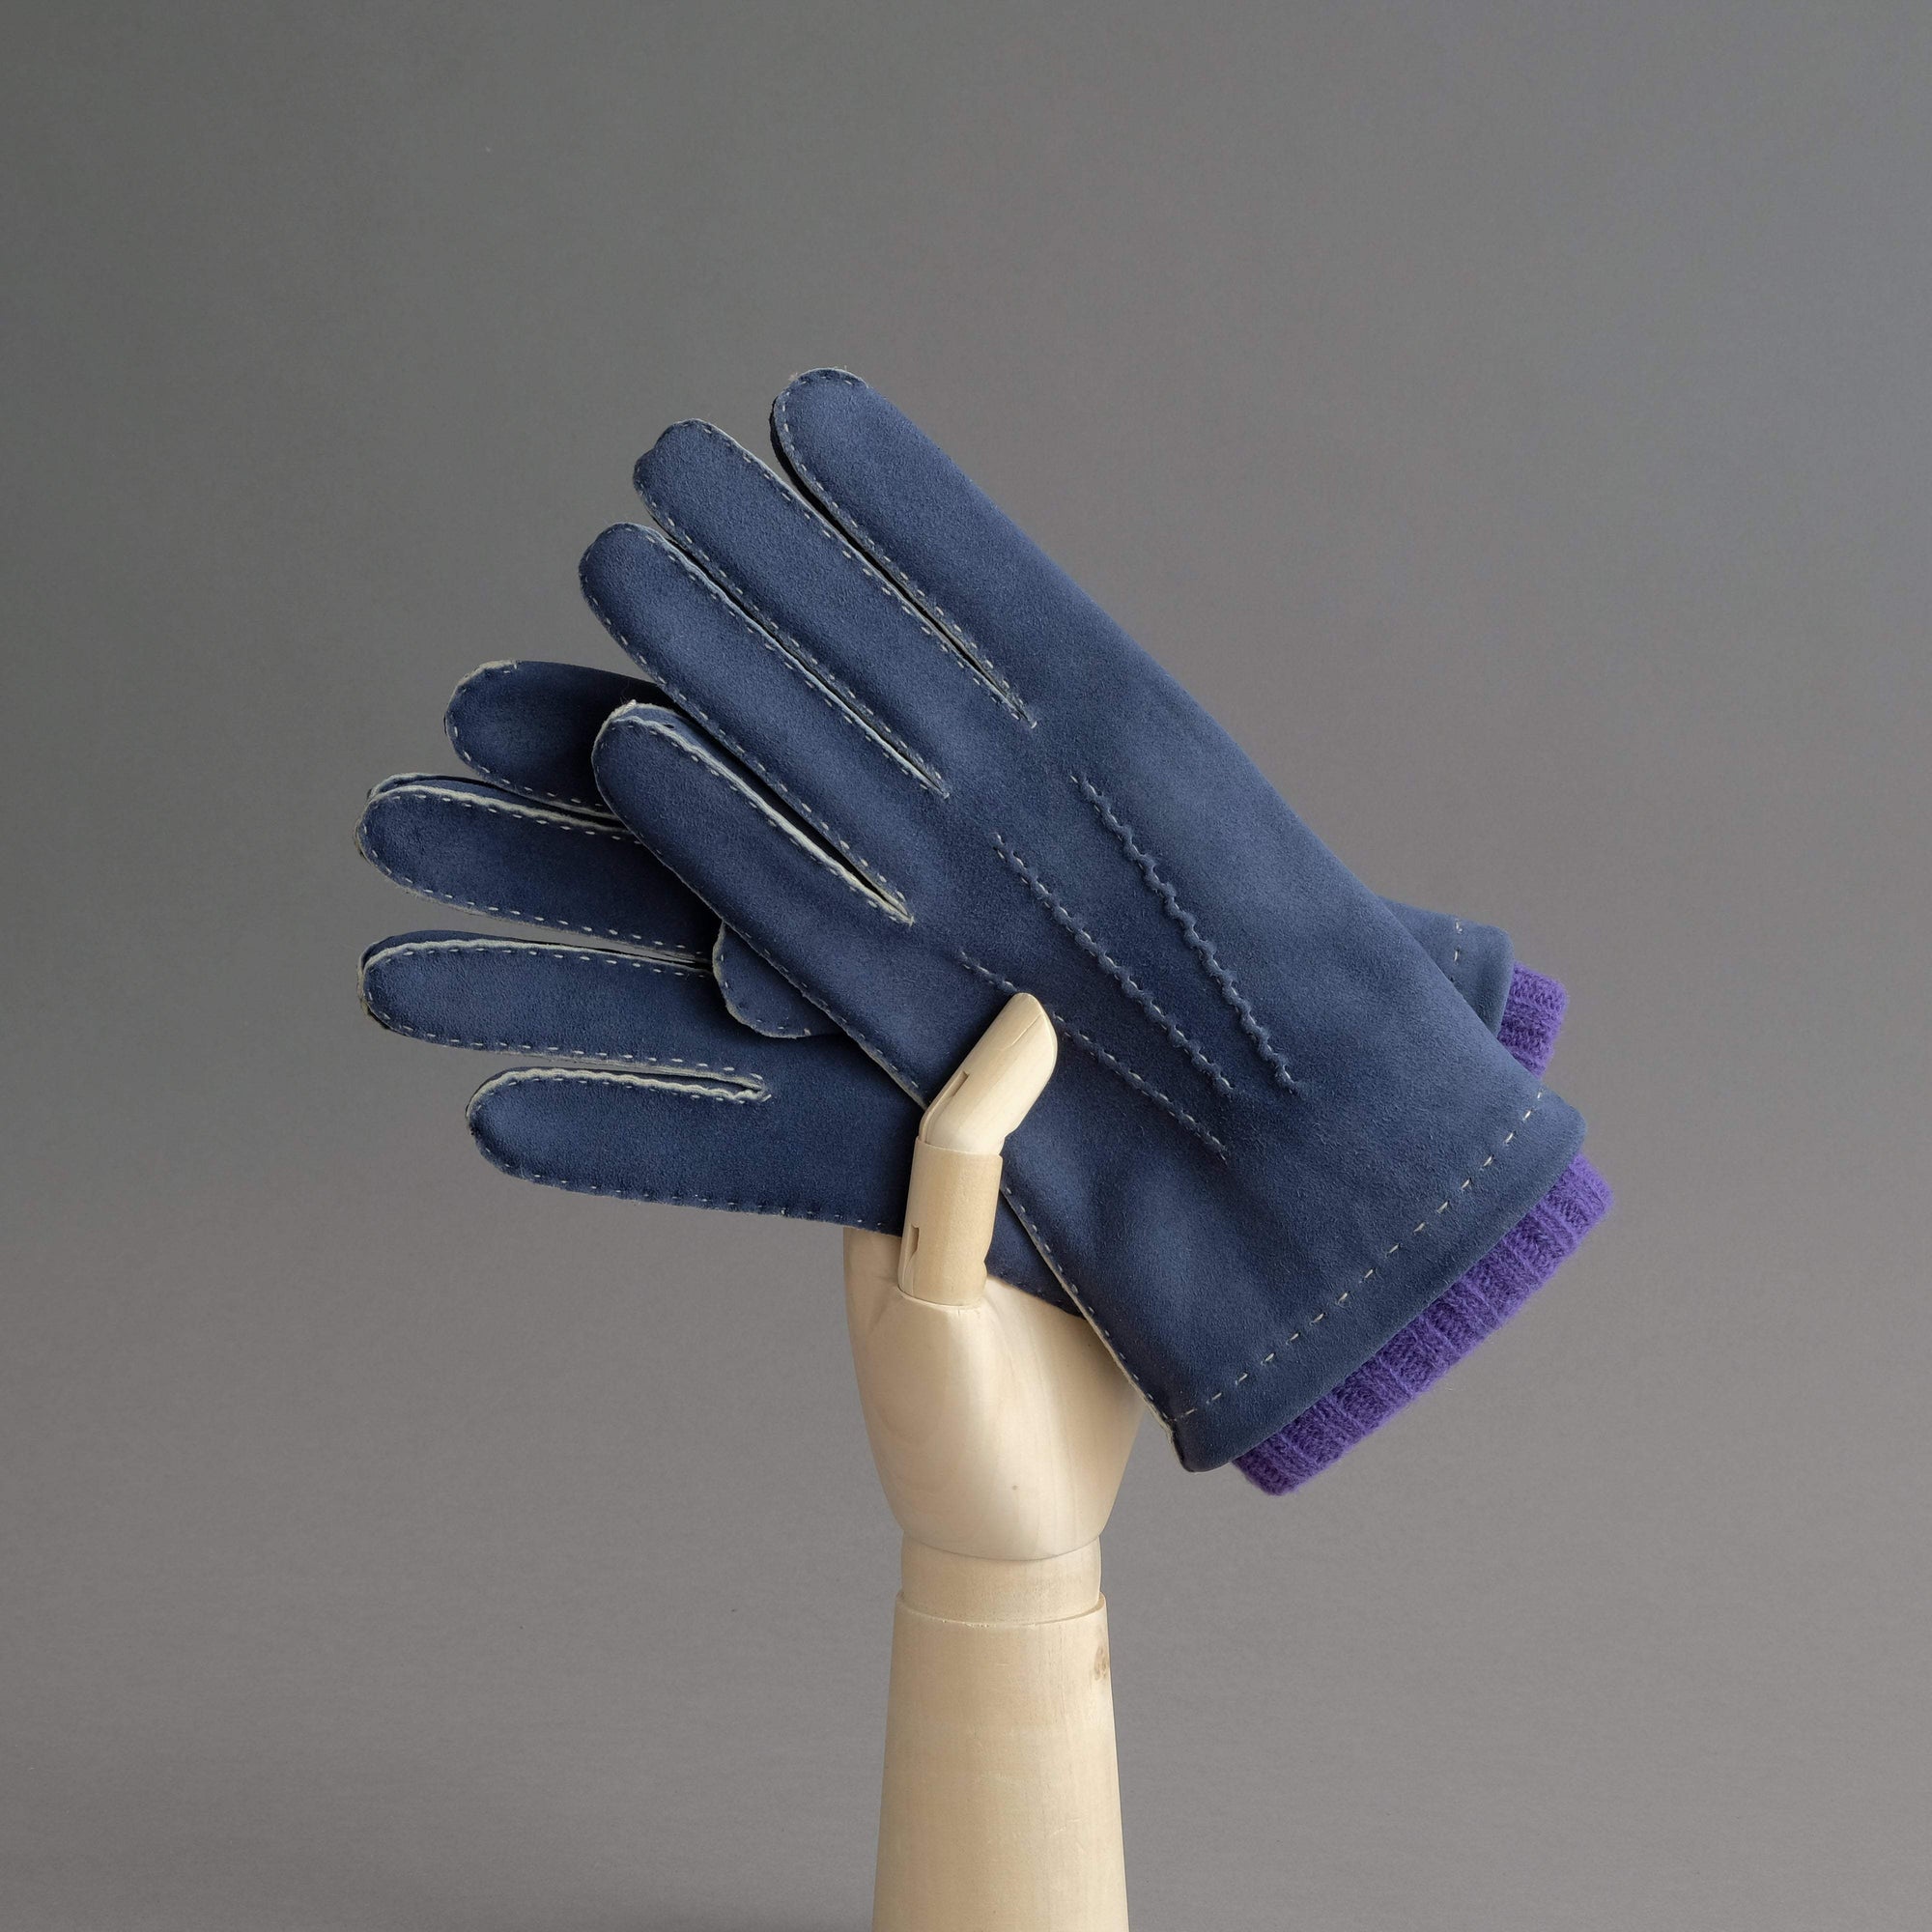 Gentlemen's Gloves from Navy Doeskin Lined with Cashmere - TR Handschuhe Wien - Thomas Riemer Handmade Gloves